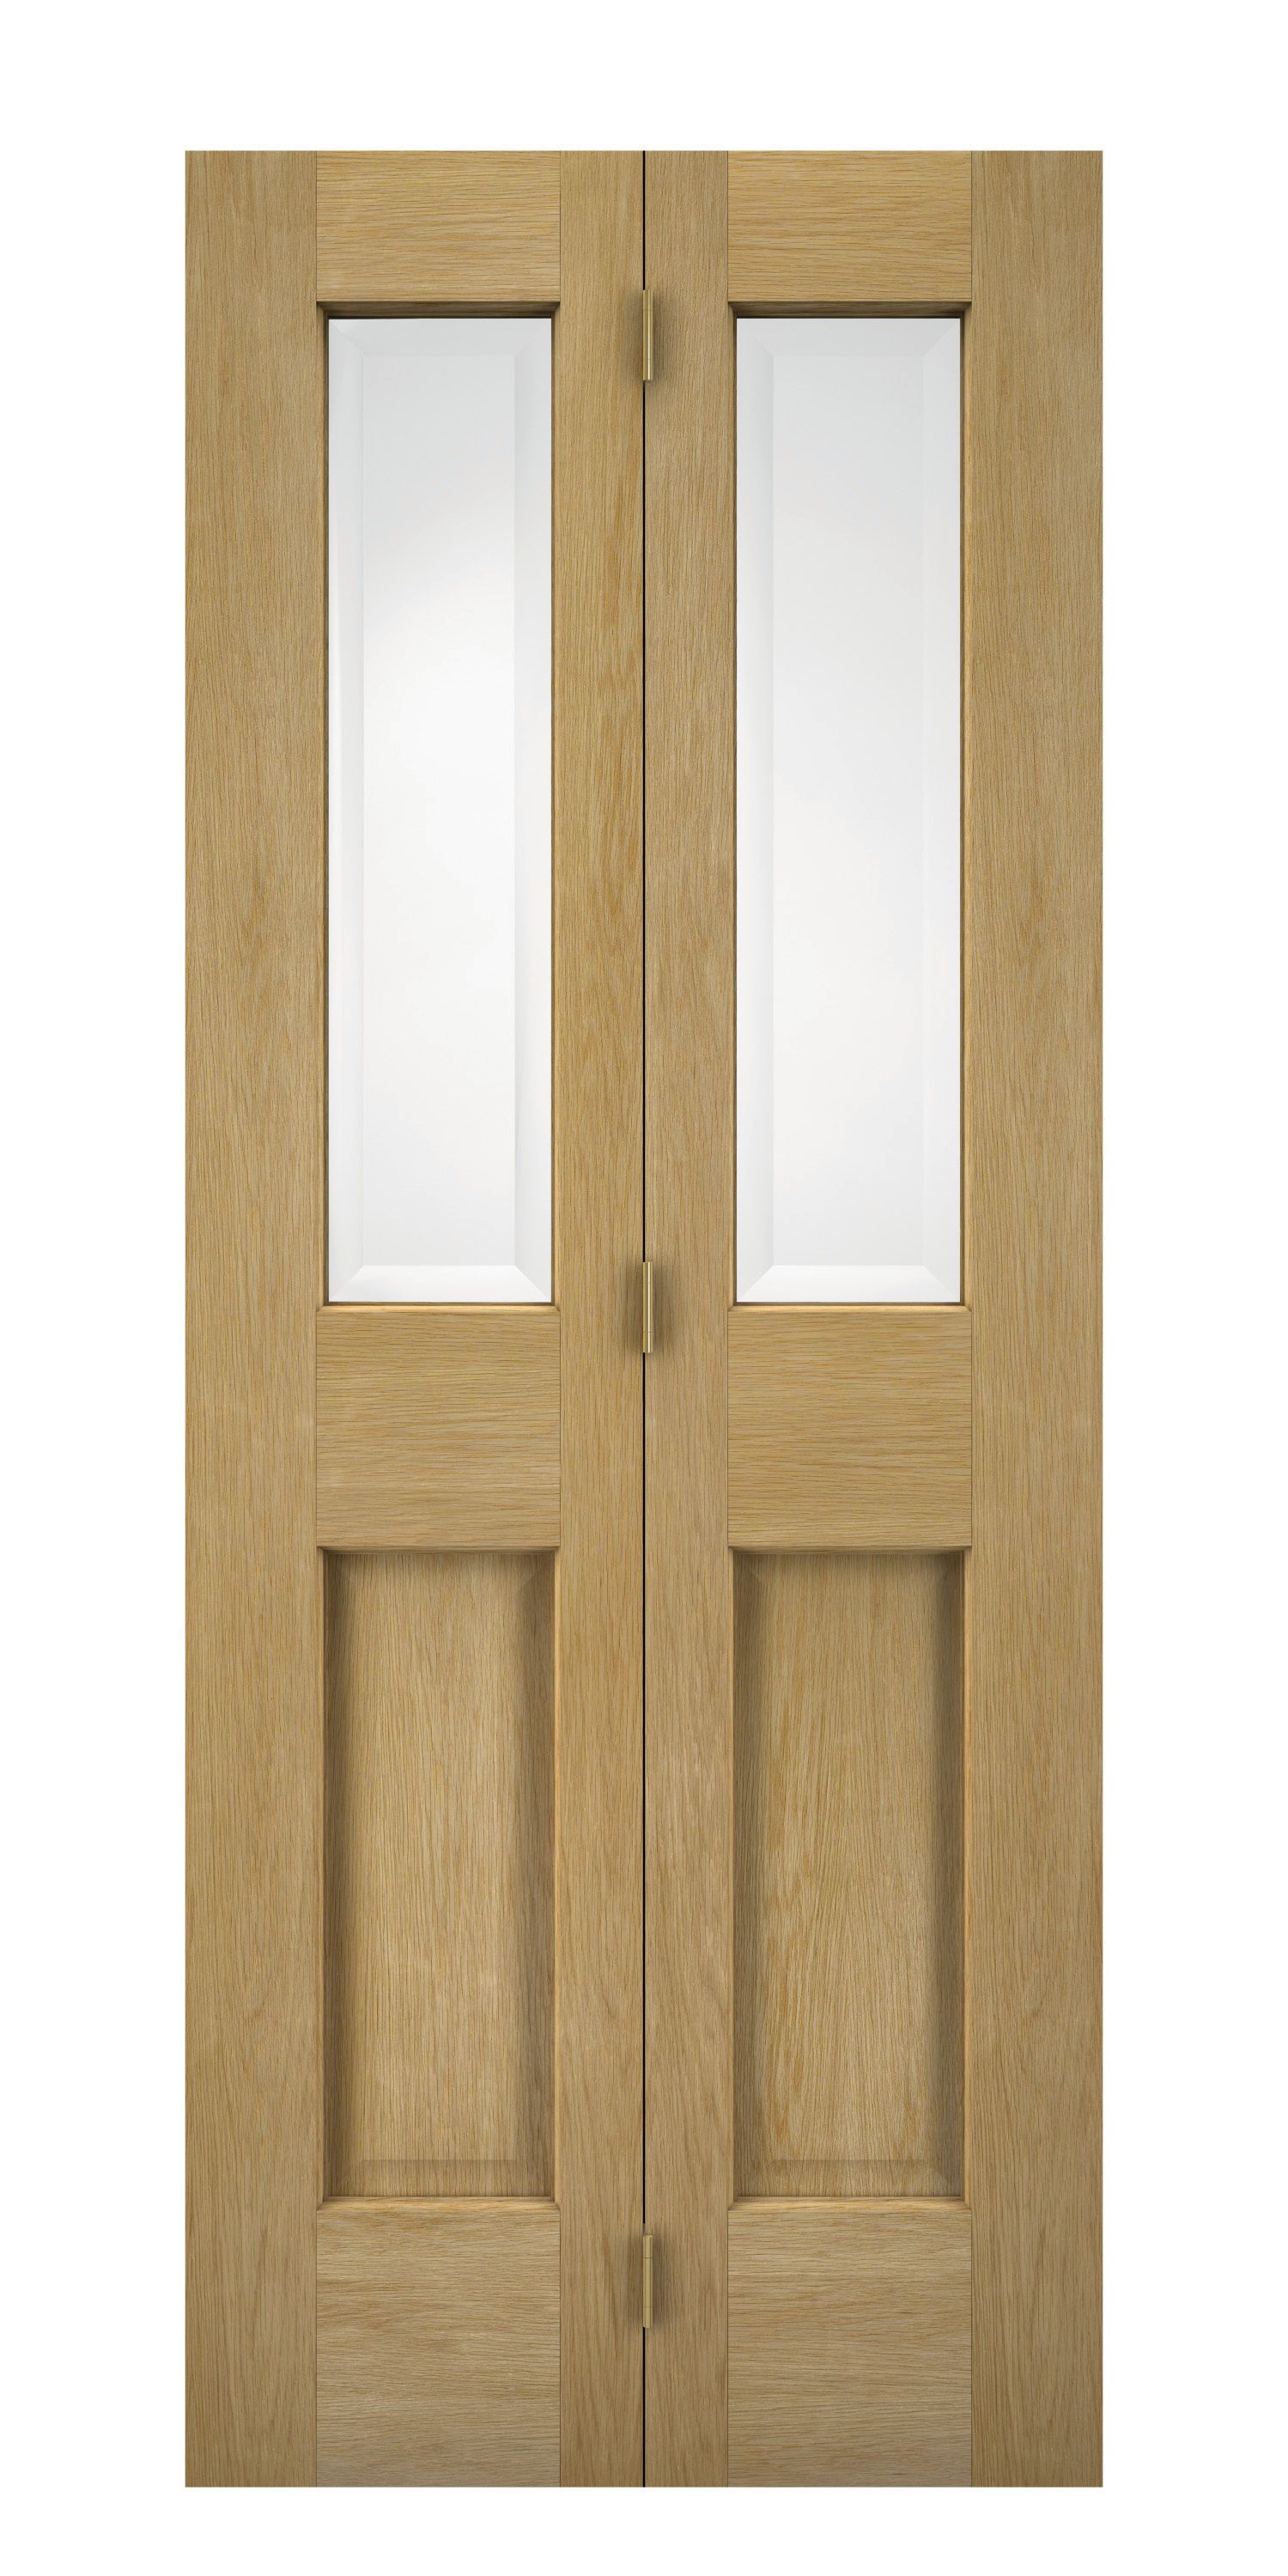 Image of Wickes Cobham Glazed Oak 4 Panel Internal Bi-Fold Door - 1981 x 686mm